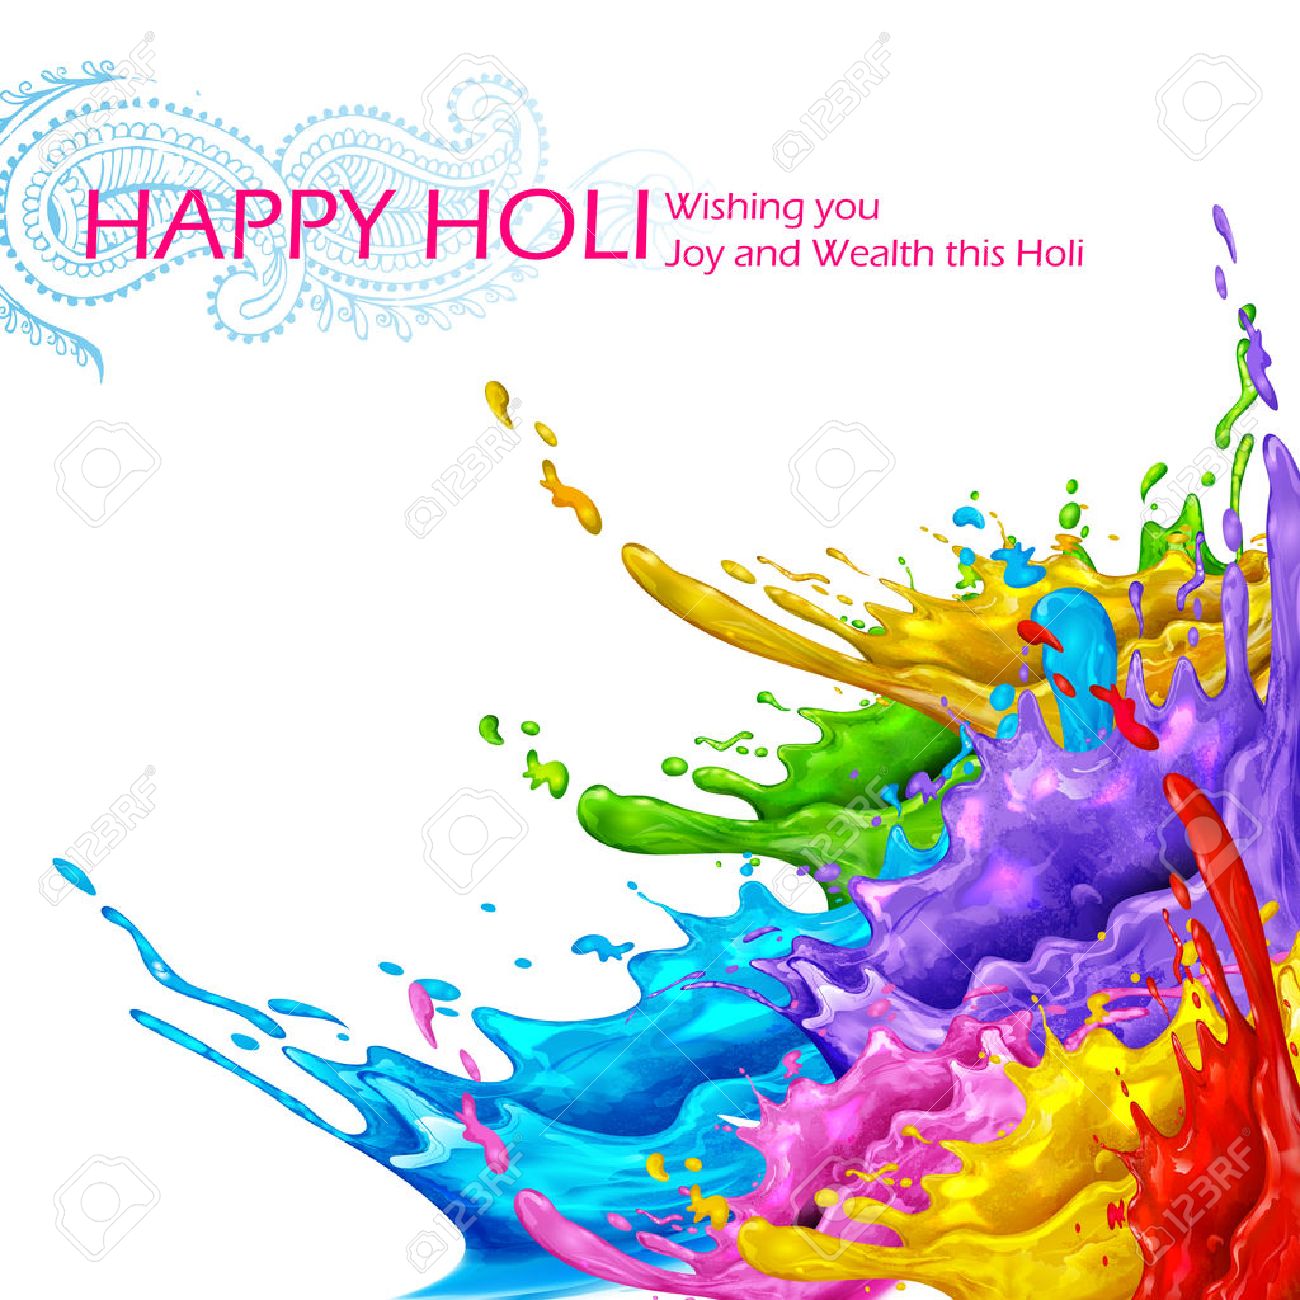 Illustration Of Colorful Splash In Happy Holi Background Royalty